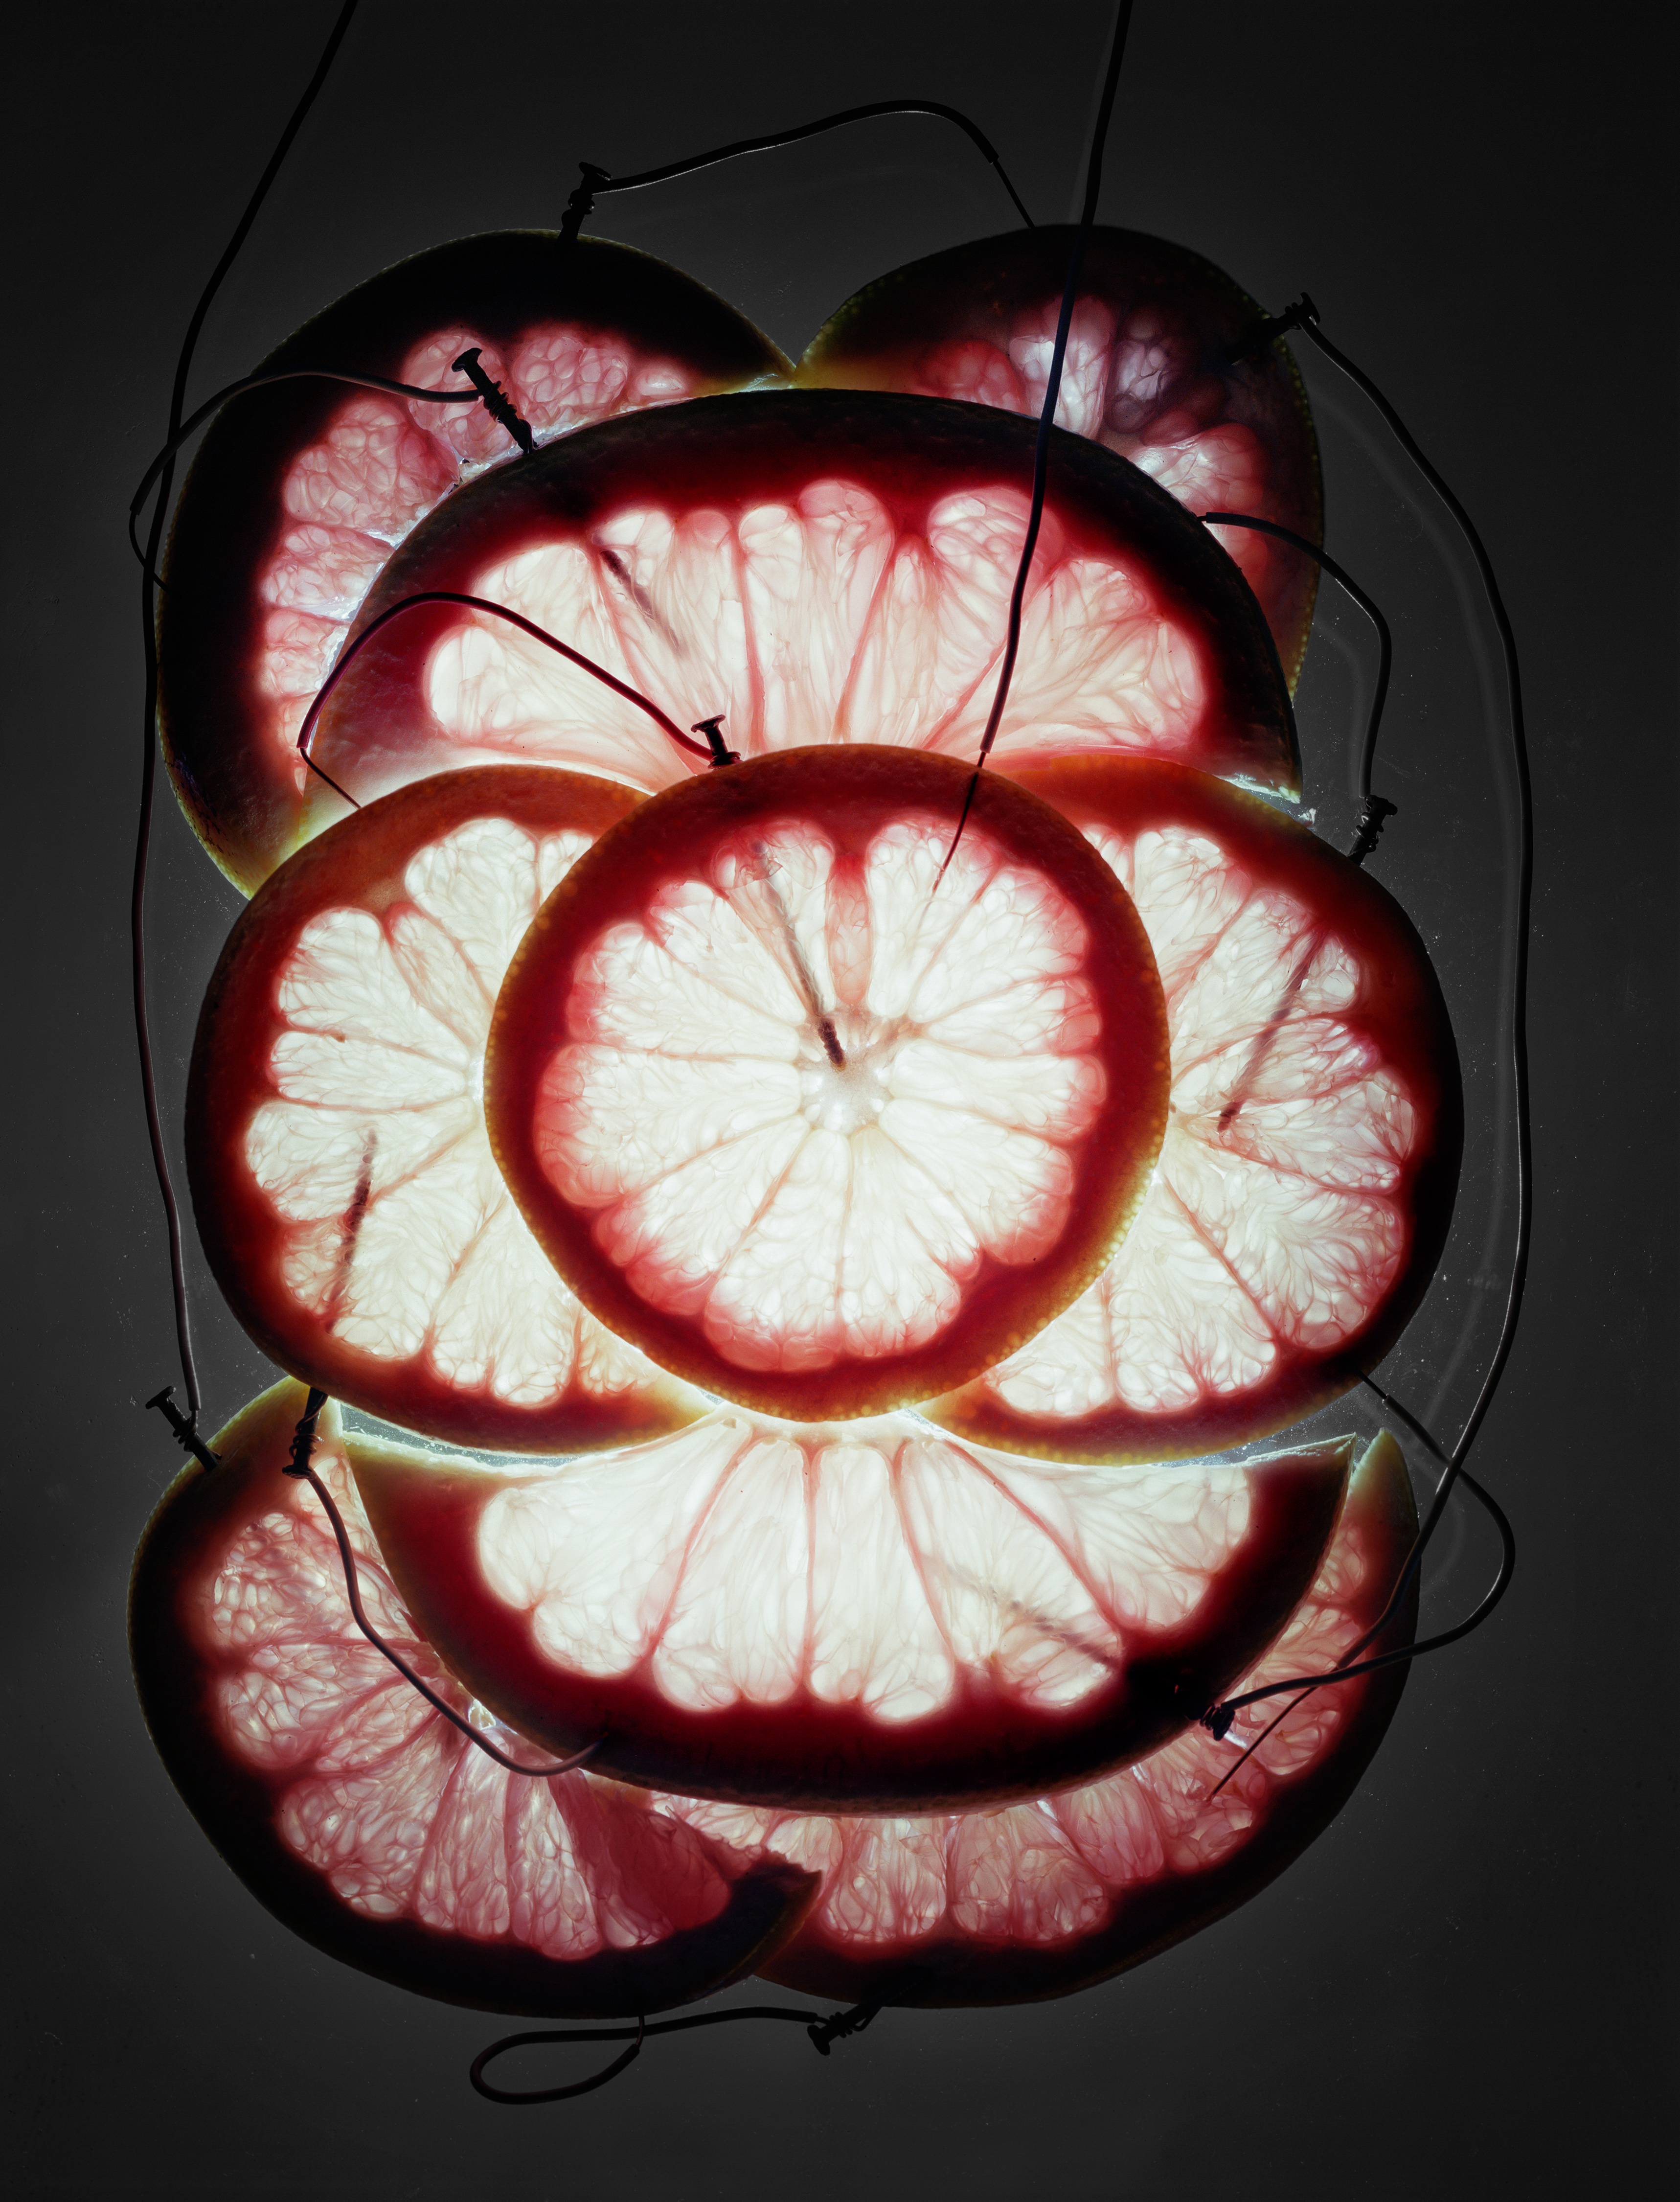 Back to Light - Grapefruit and Pomelo Battery, 2013